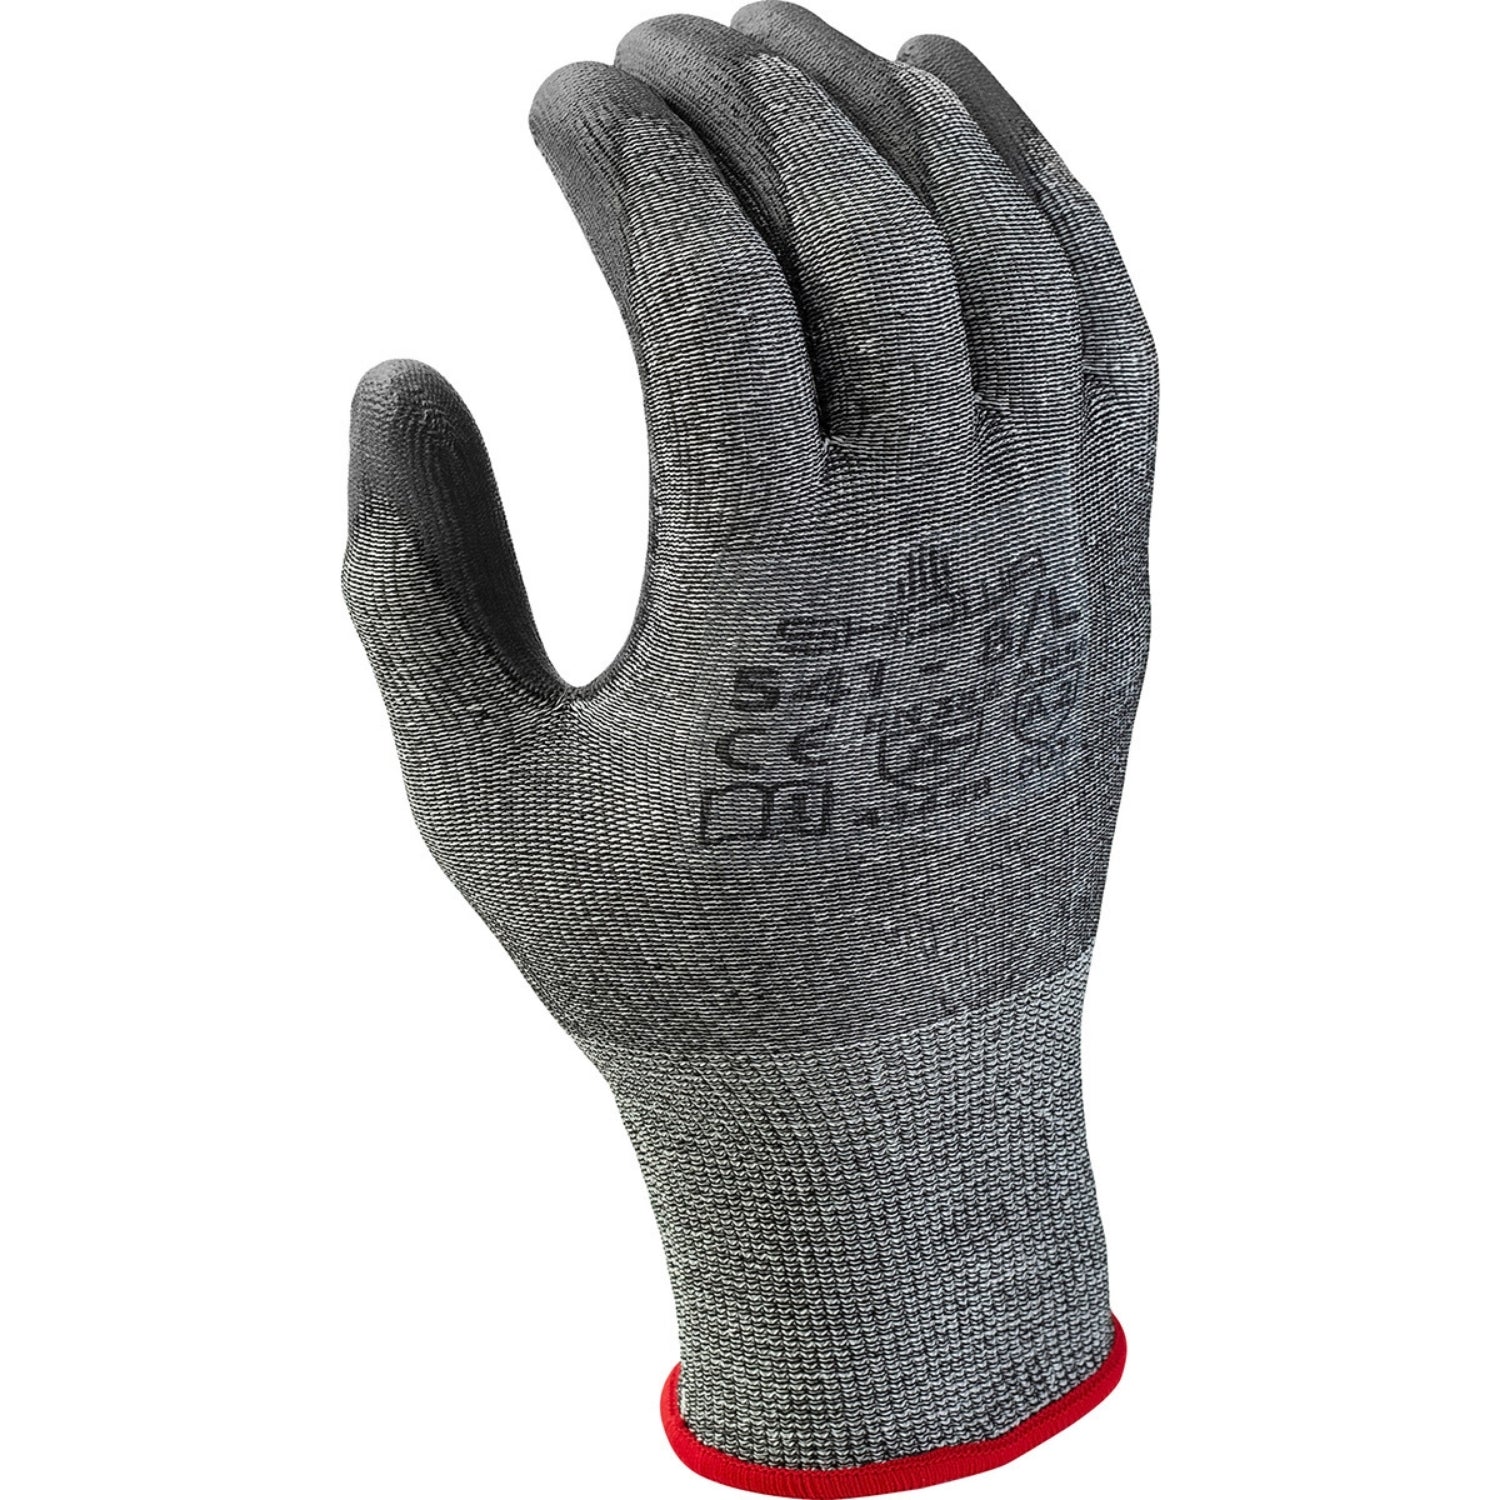 SHOWA 541 - Cut Resistant Gloves